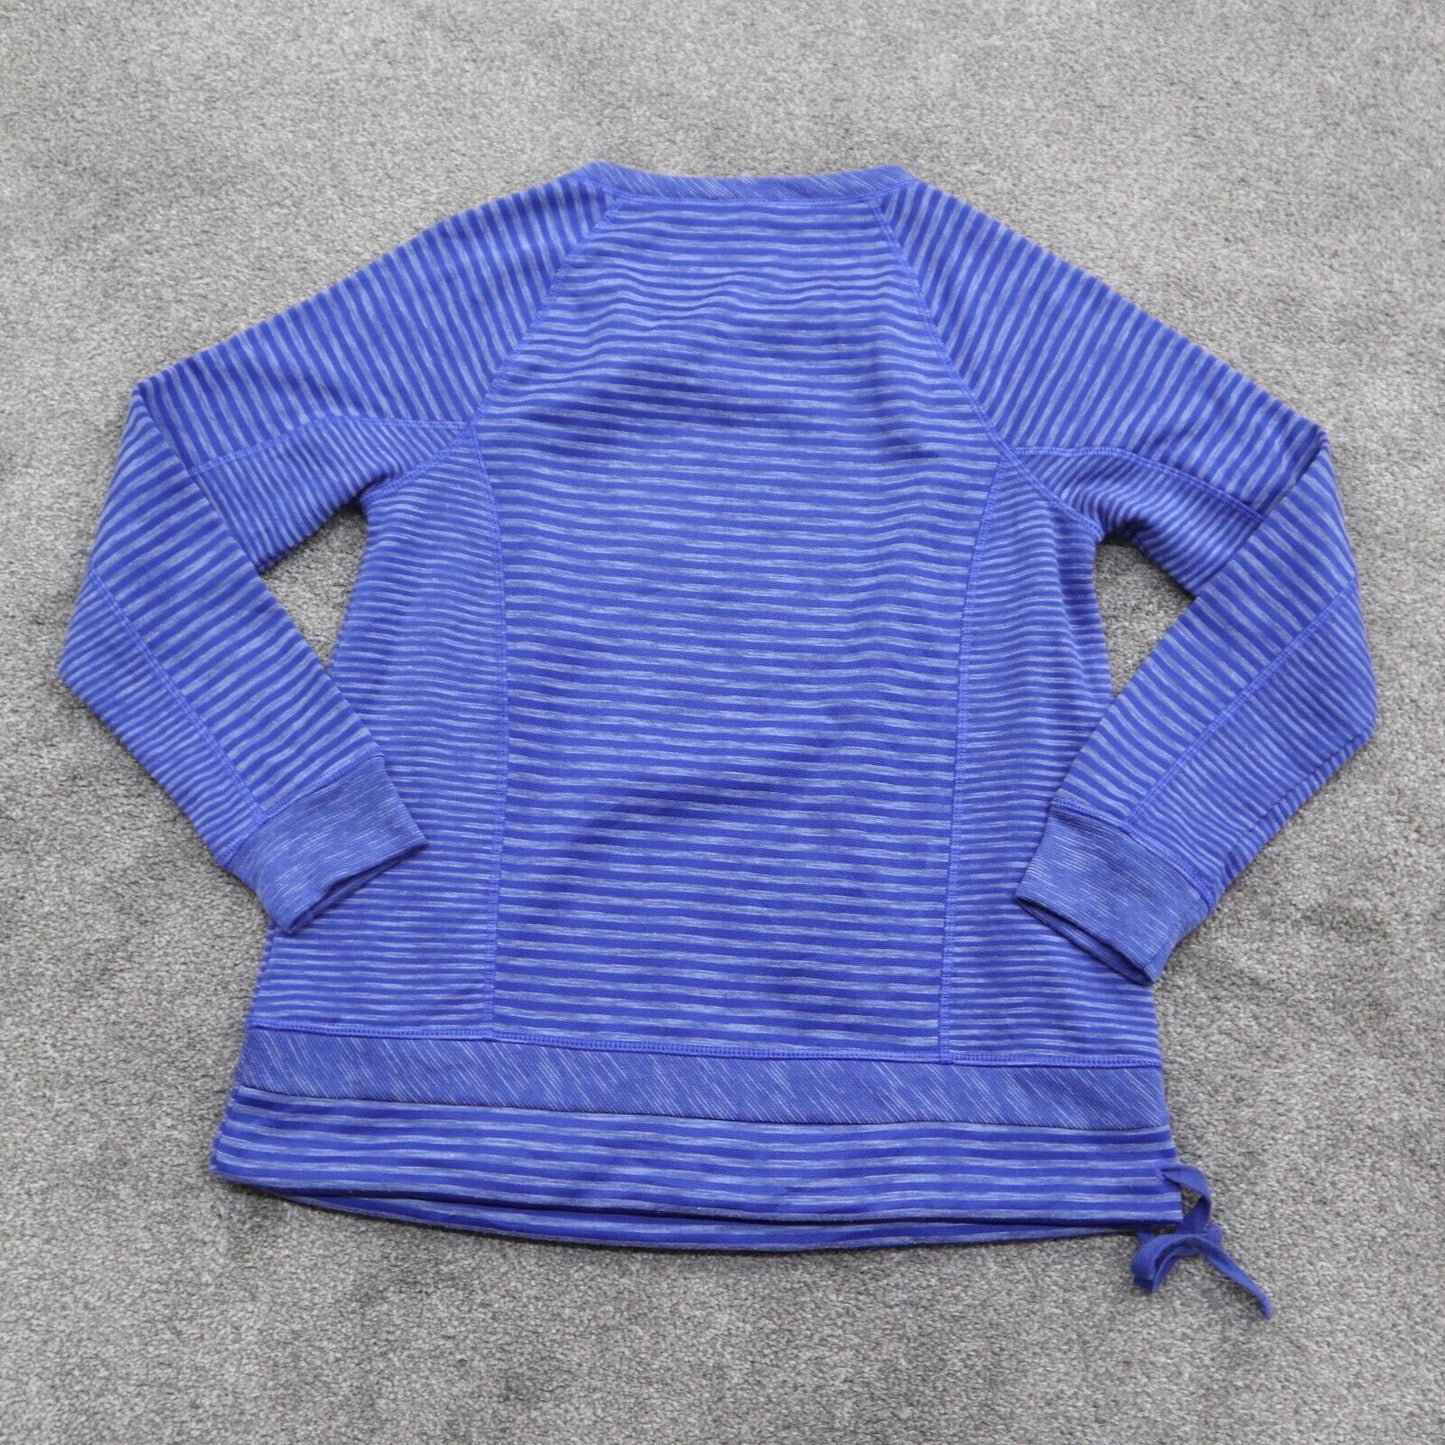 Talbots Womens Striped Pullover Sweatshirt Top Long Sleeve Round Neck Blue Sz P